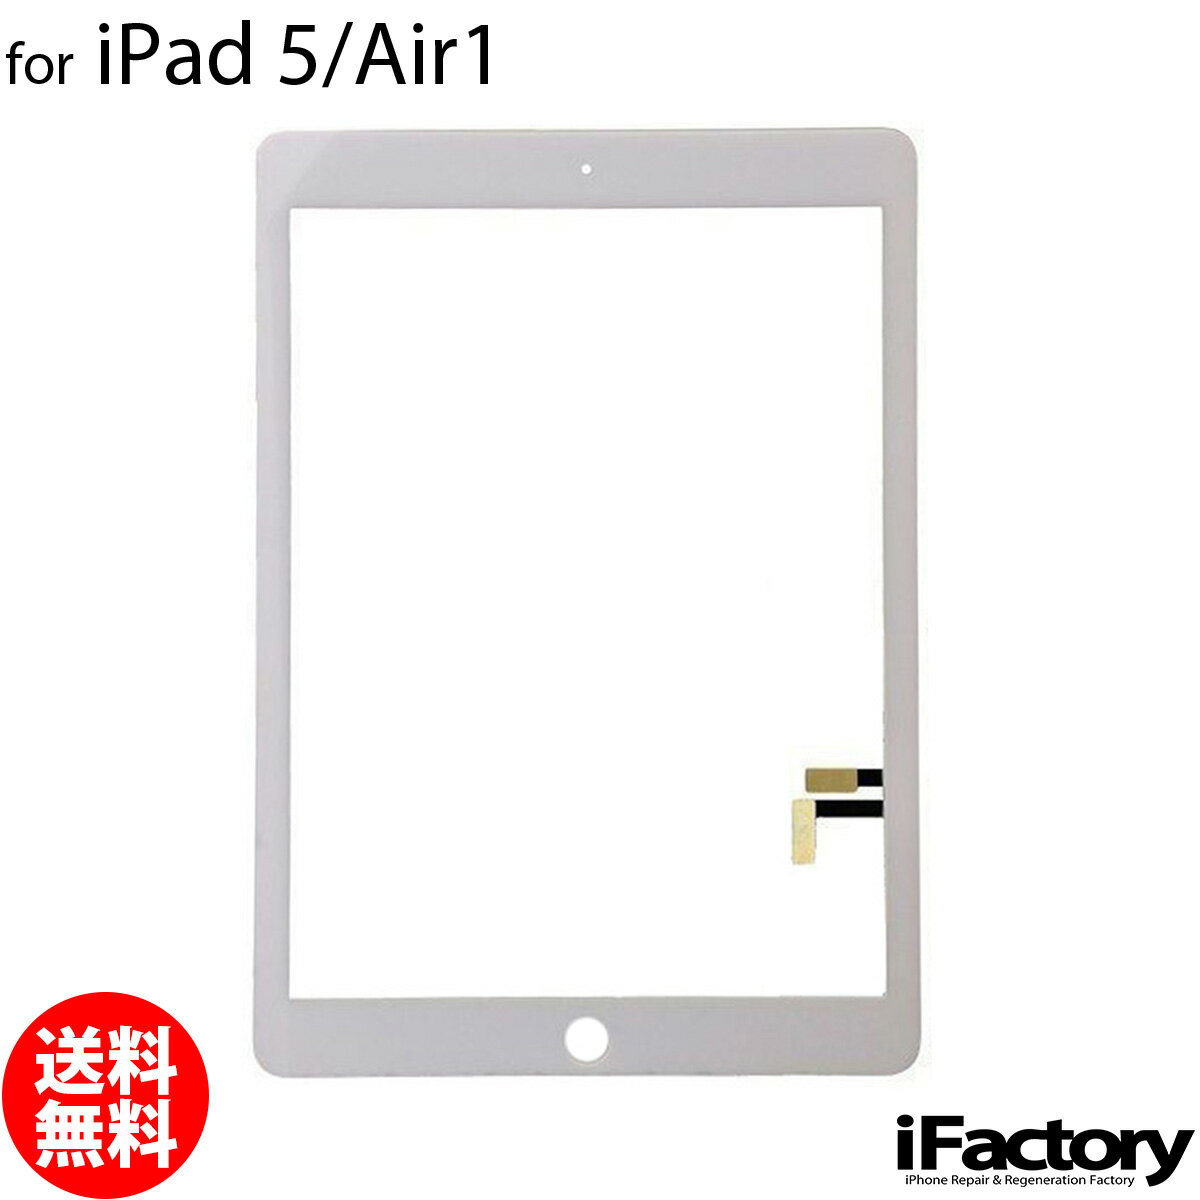 iPad 5/Air 互換 タッチパネル ホワイト パネルテープ付属